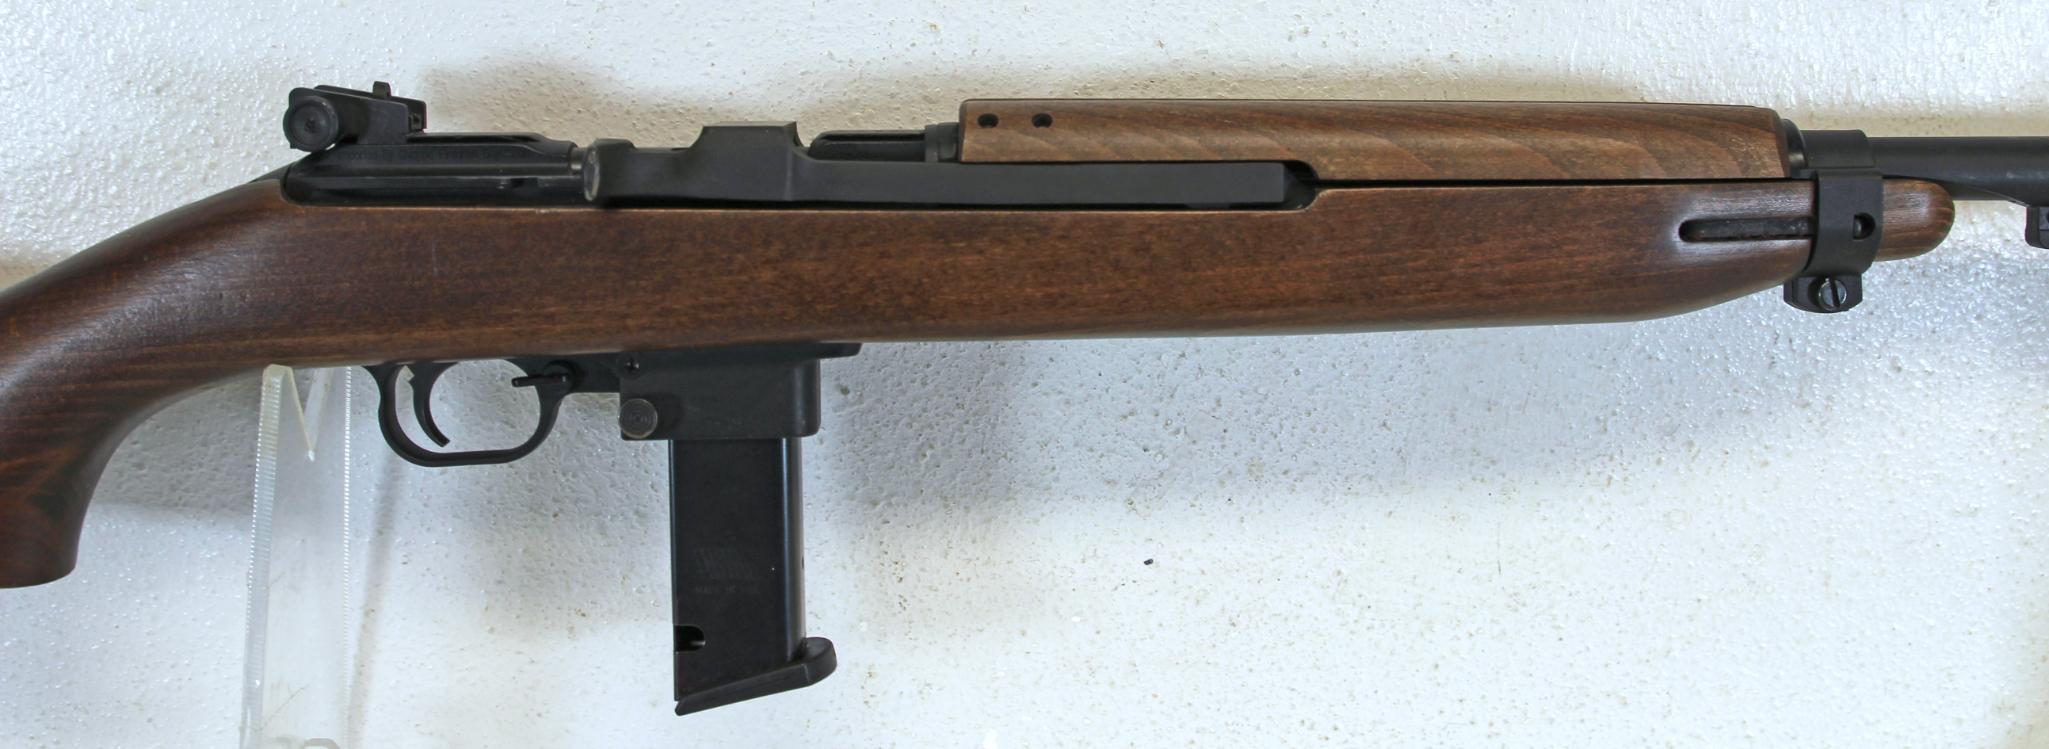 Citadel Model M1-9 9 mm Semi-Auto Carbine Rifle SN#14N24149...